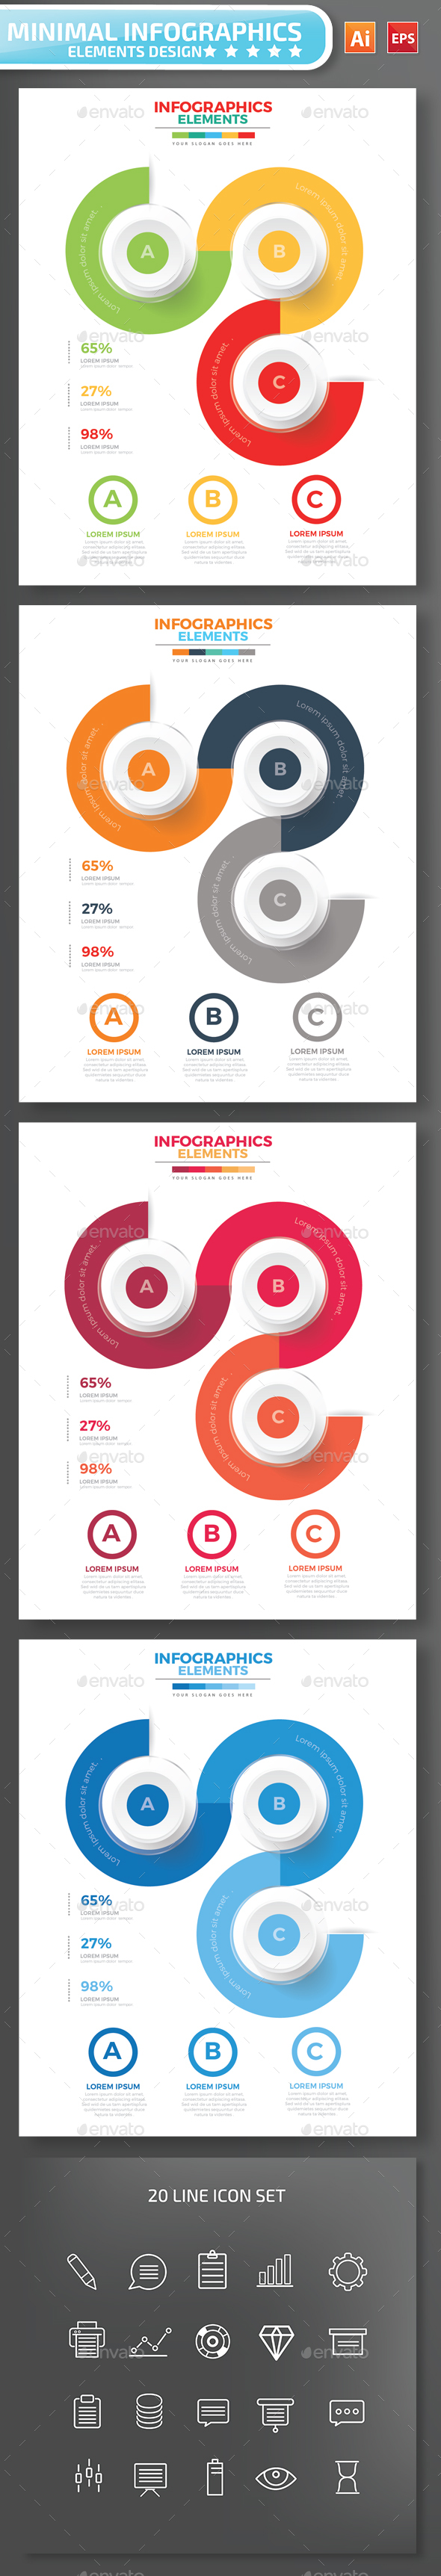 Minimal infographic Design